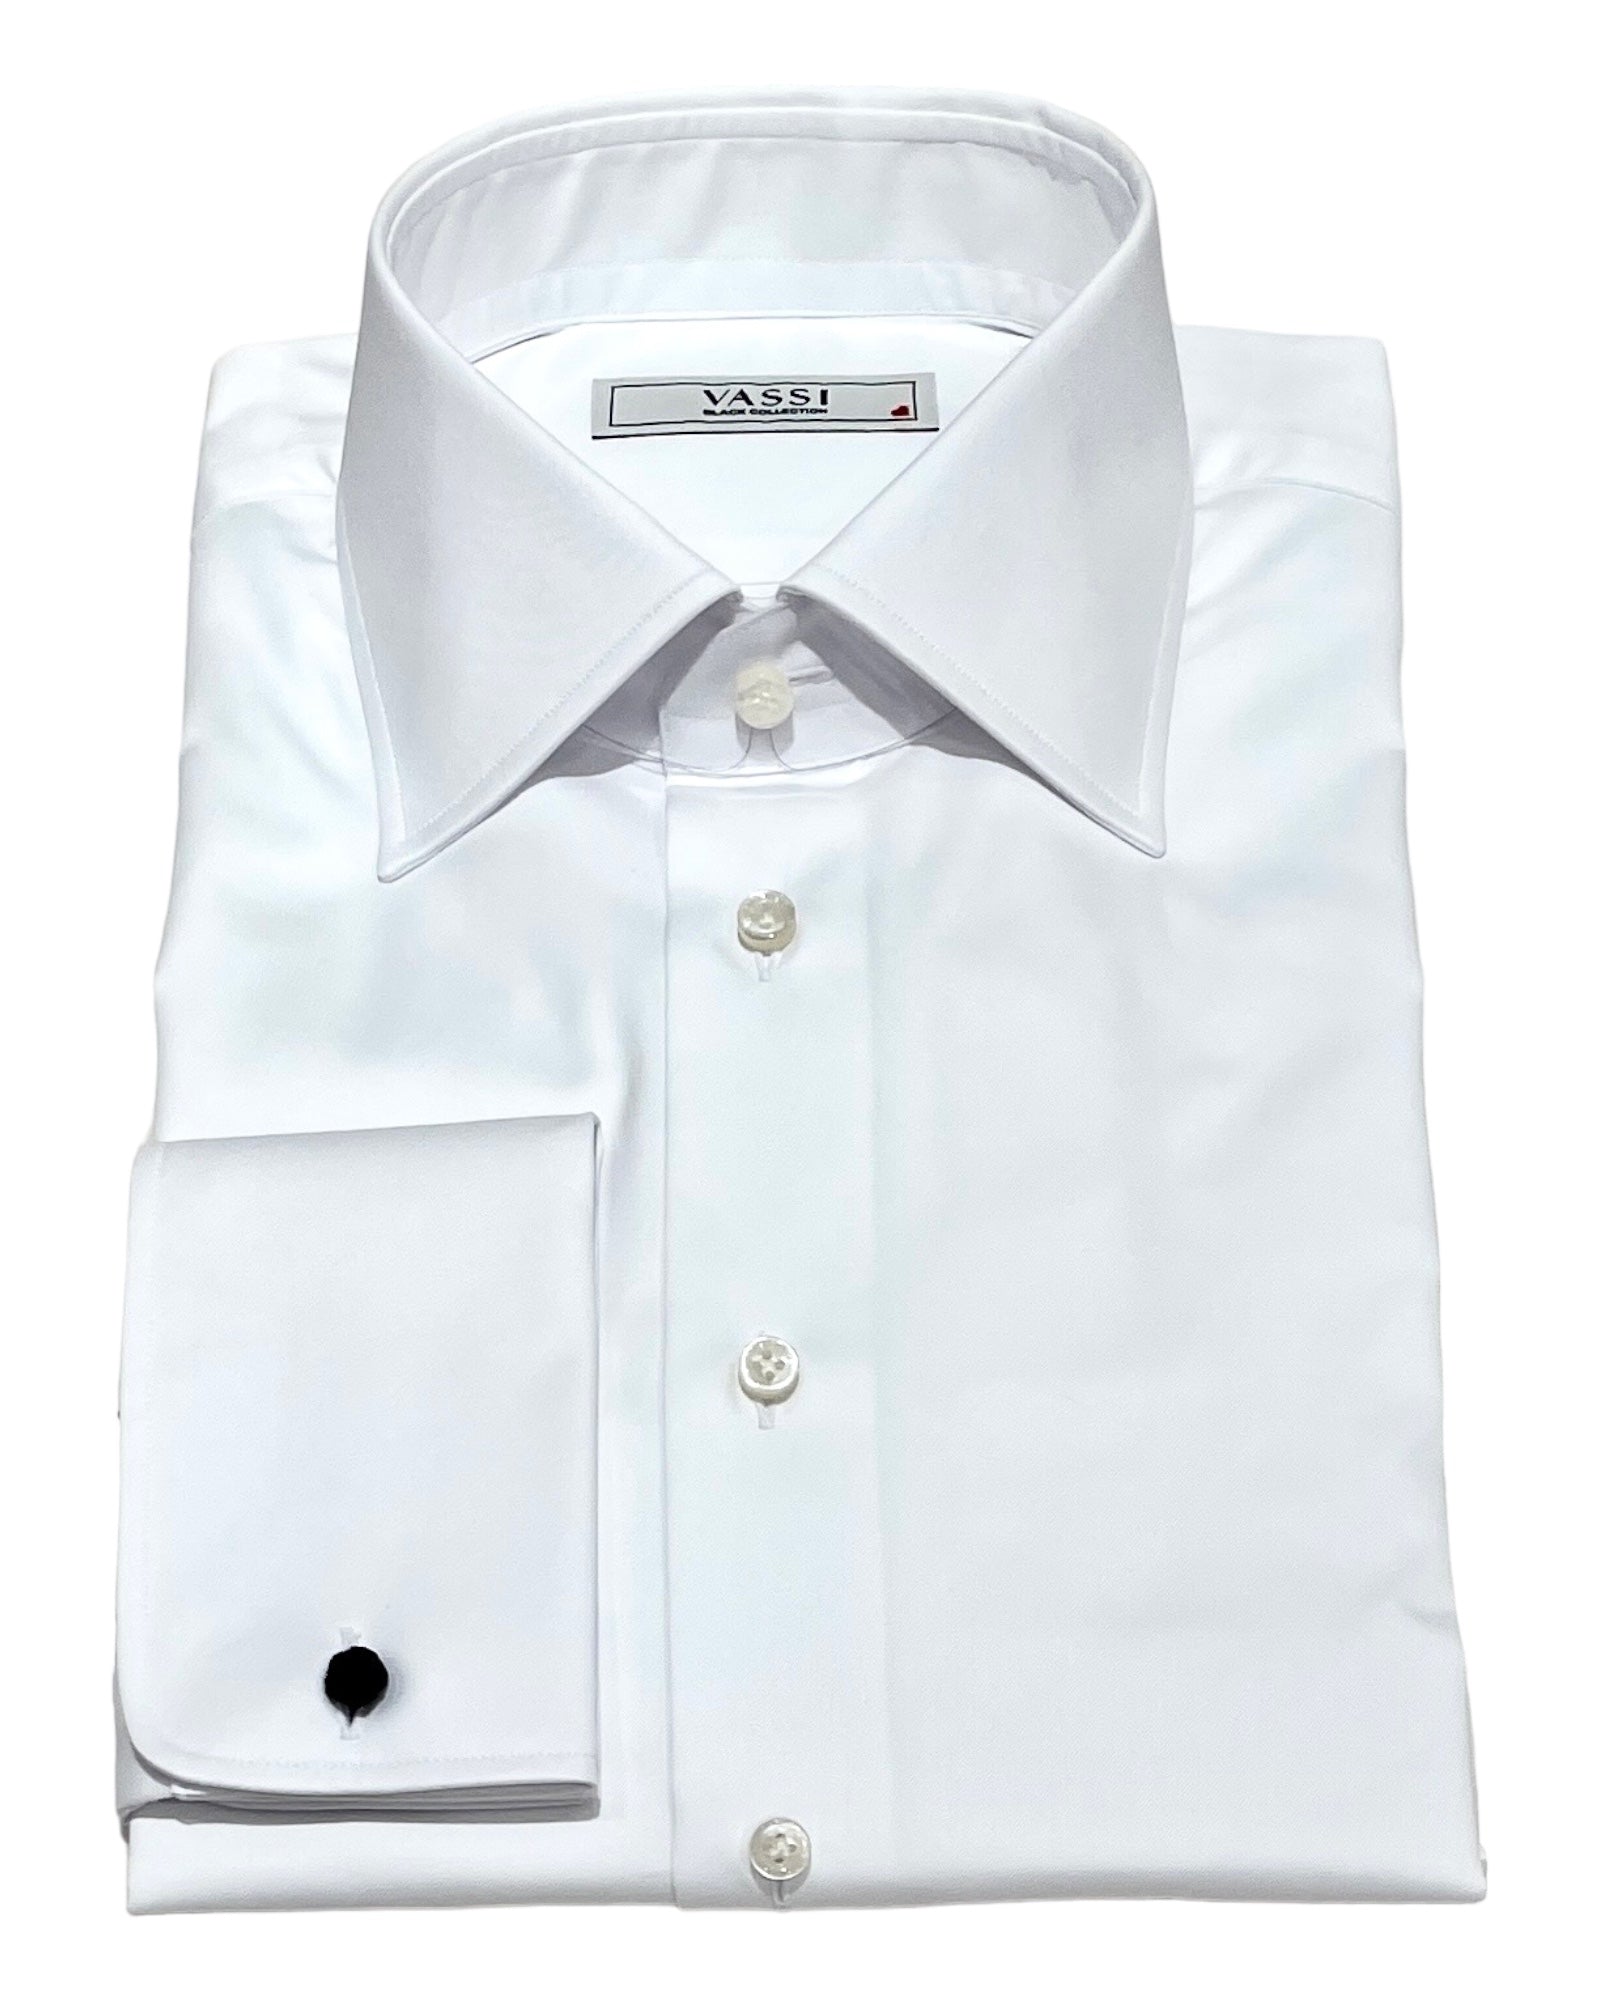 Essential Classic French Cuff Dress Shirt - Plain White DRESS SHIRTS15.5